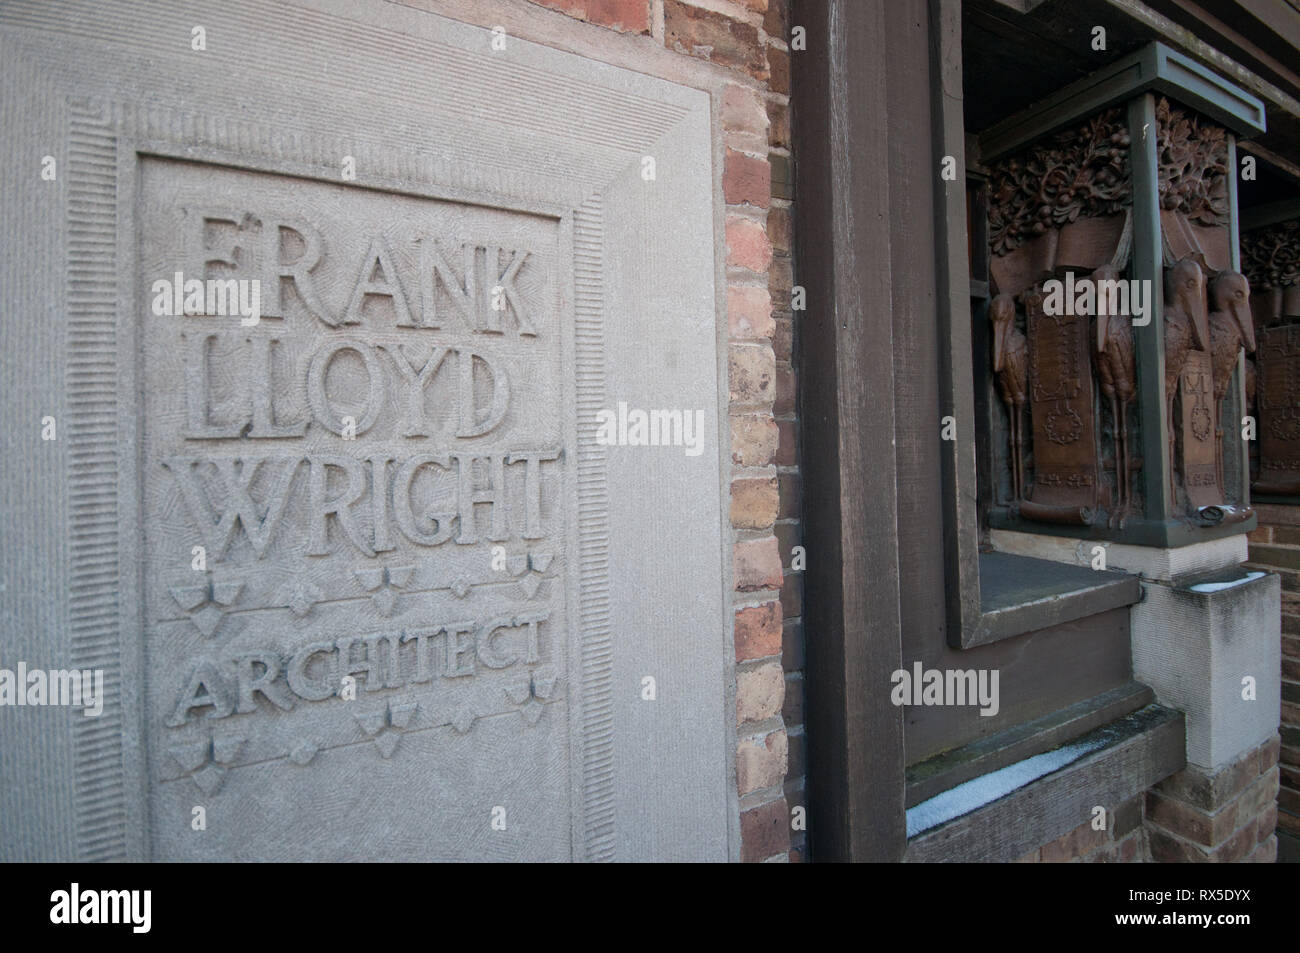 America, United States, Illinois, Chicago, Oak Park Frank Lloyd Wright Home and Studio Stock Photo